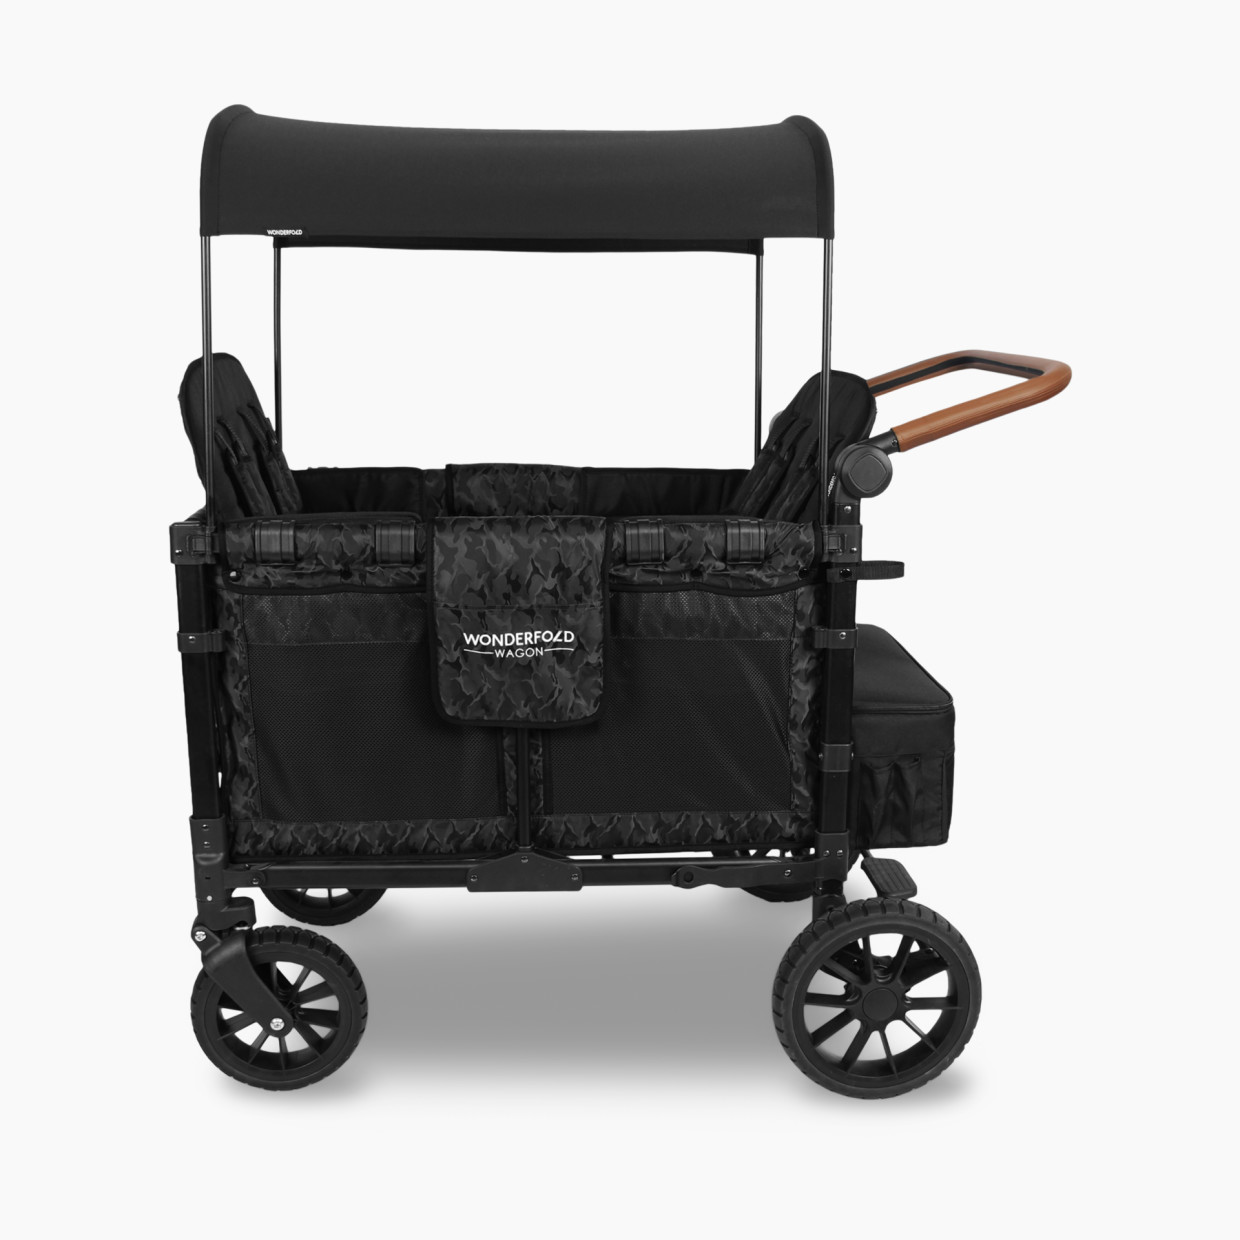 WonderFold Wagon W4 Luxe Quad Stroller Wagon (4 Seater) - Black Camo.